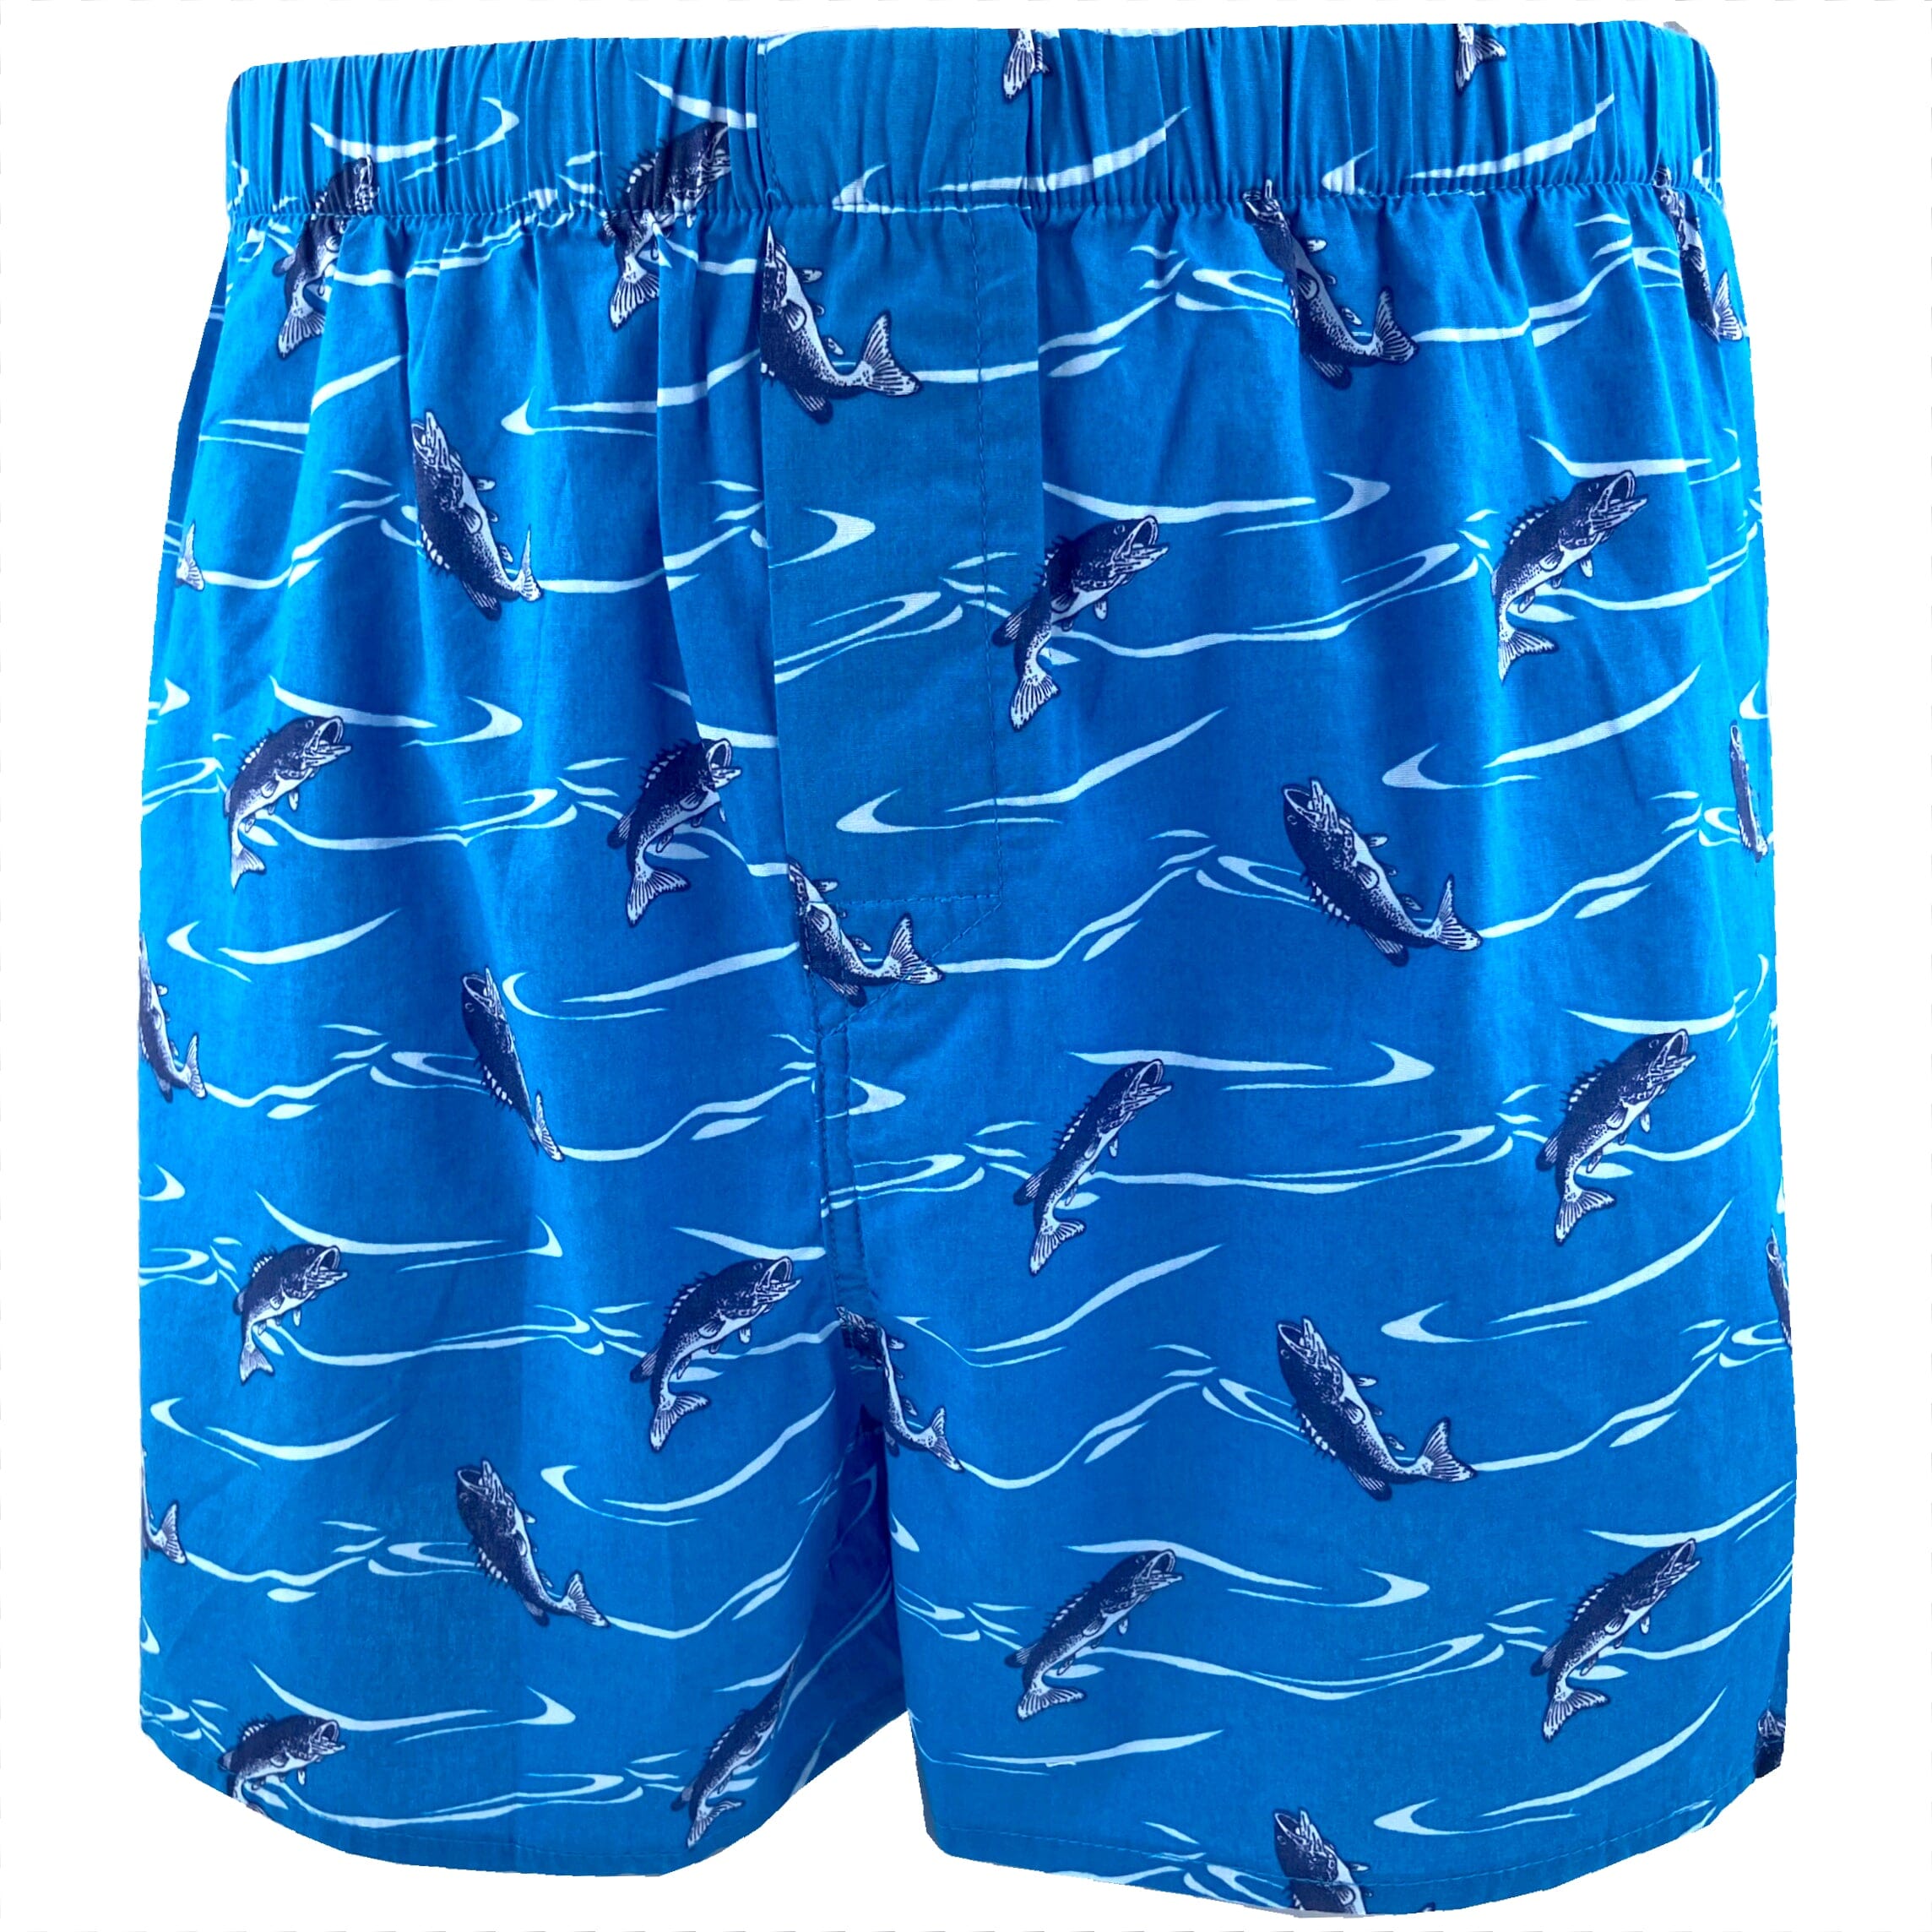 Fish Boxers For Men. Buy Men's Sea Bass Boxer Shorts Here